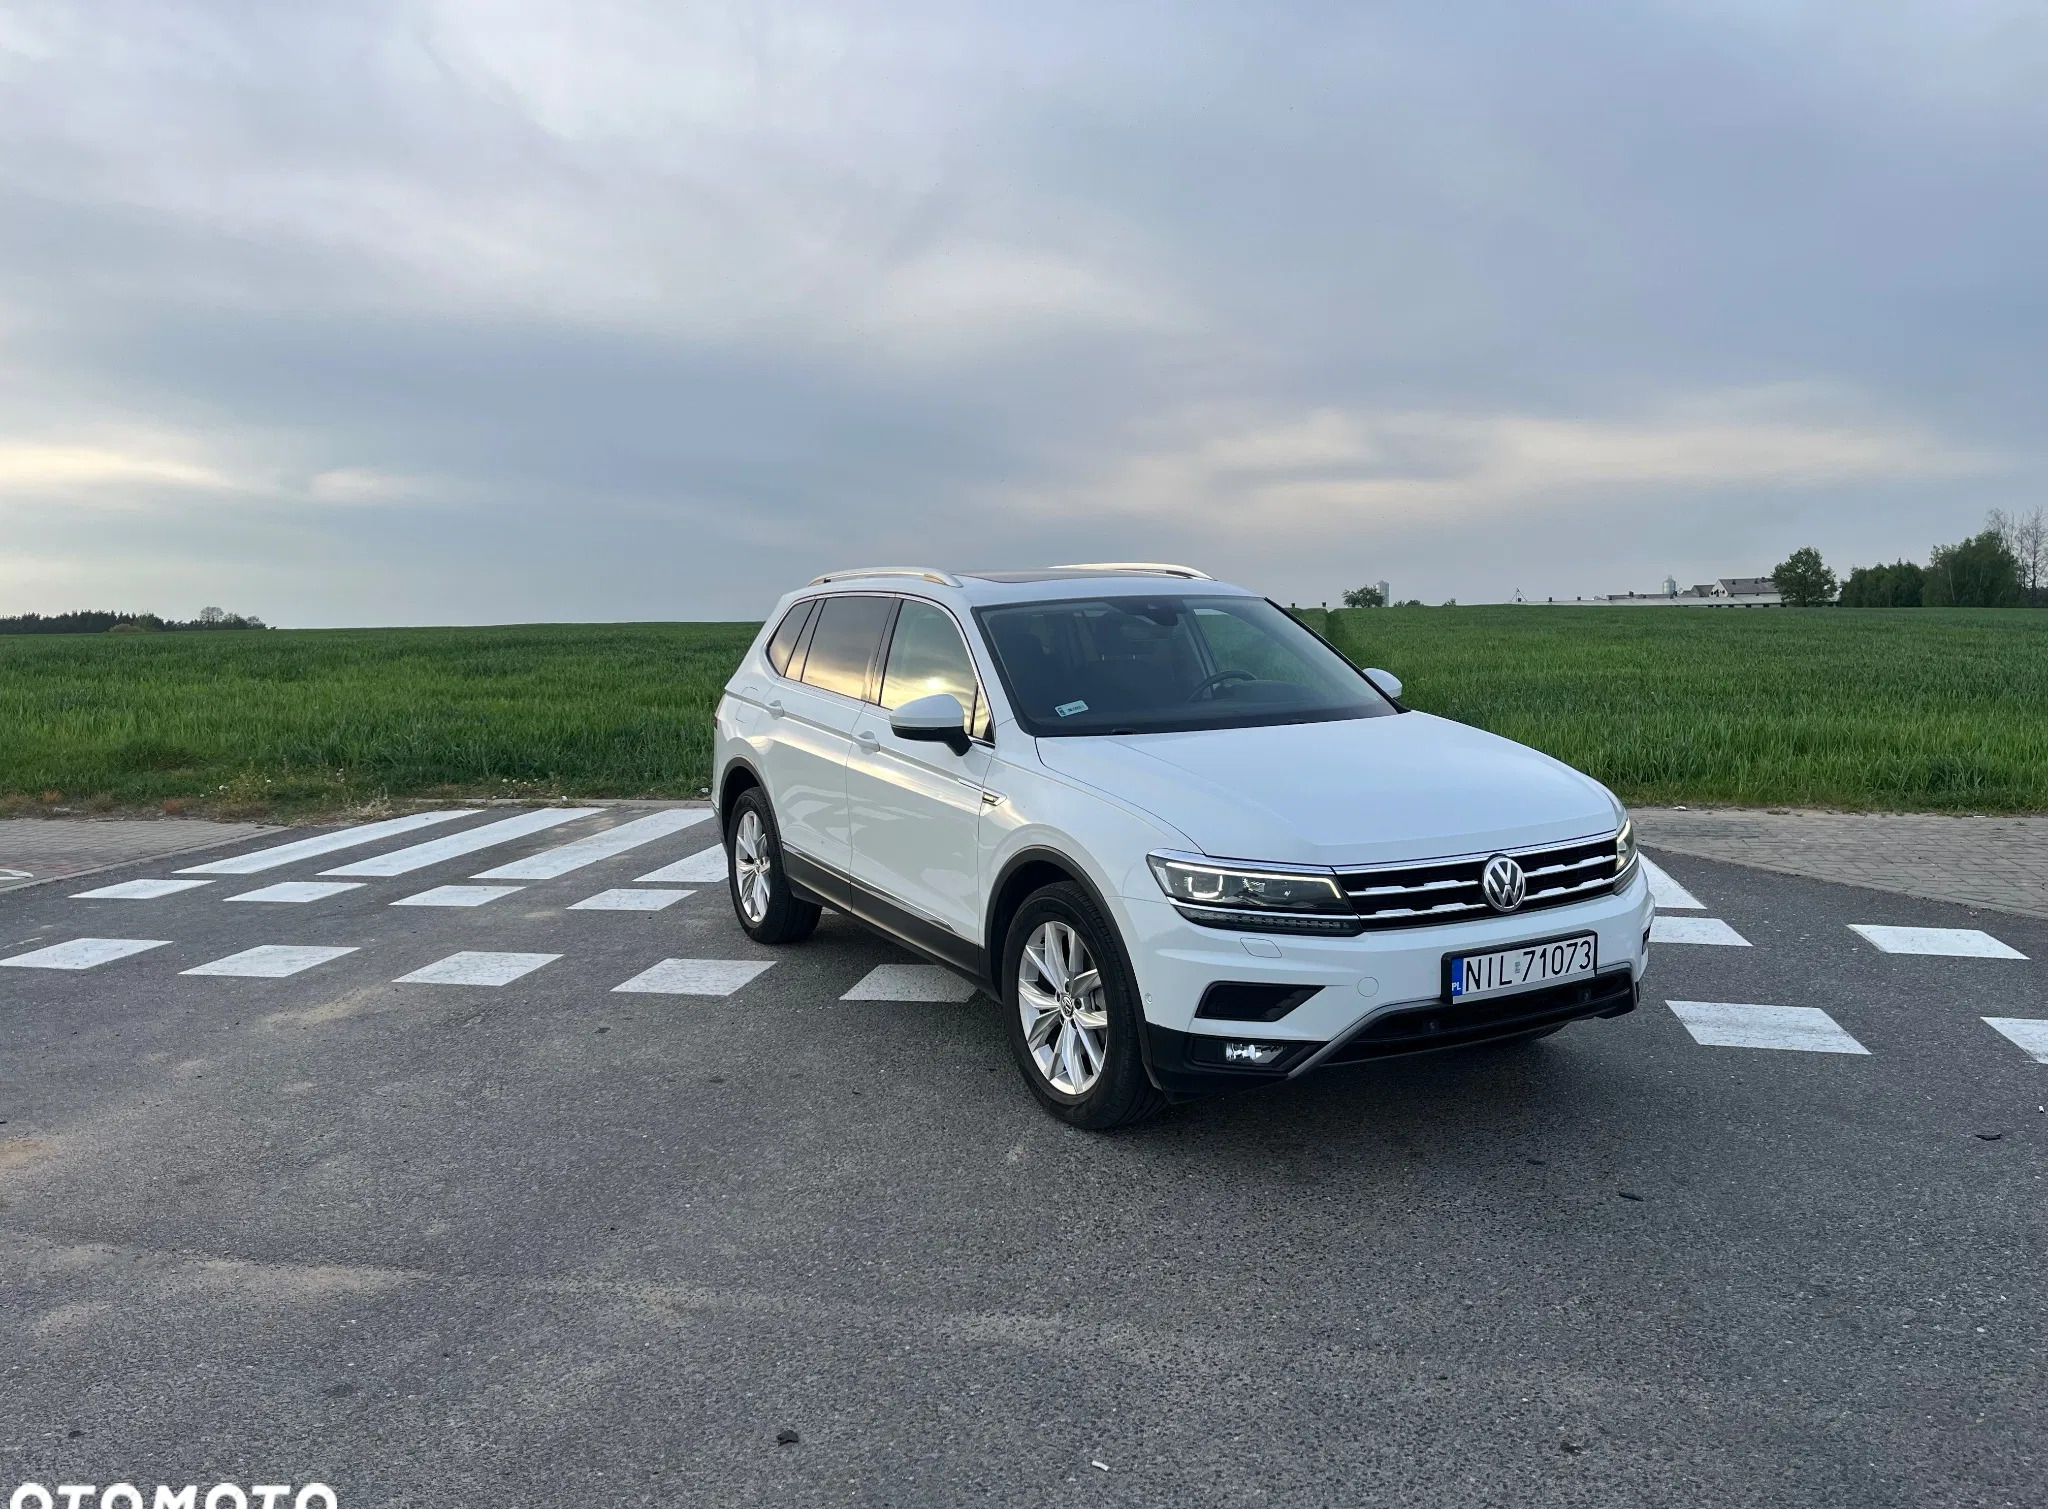 volkswagen tiguan Volkswagen Tiguan cena 106000 przebieg: 204537, rok produkcji 2018 z Iława